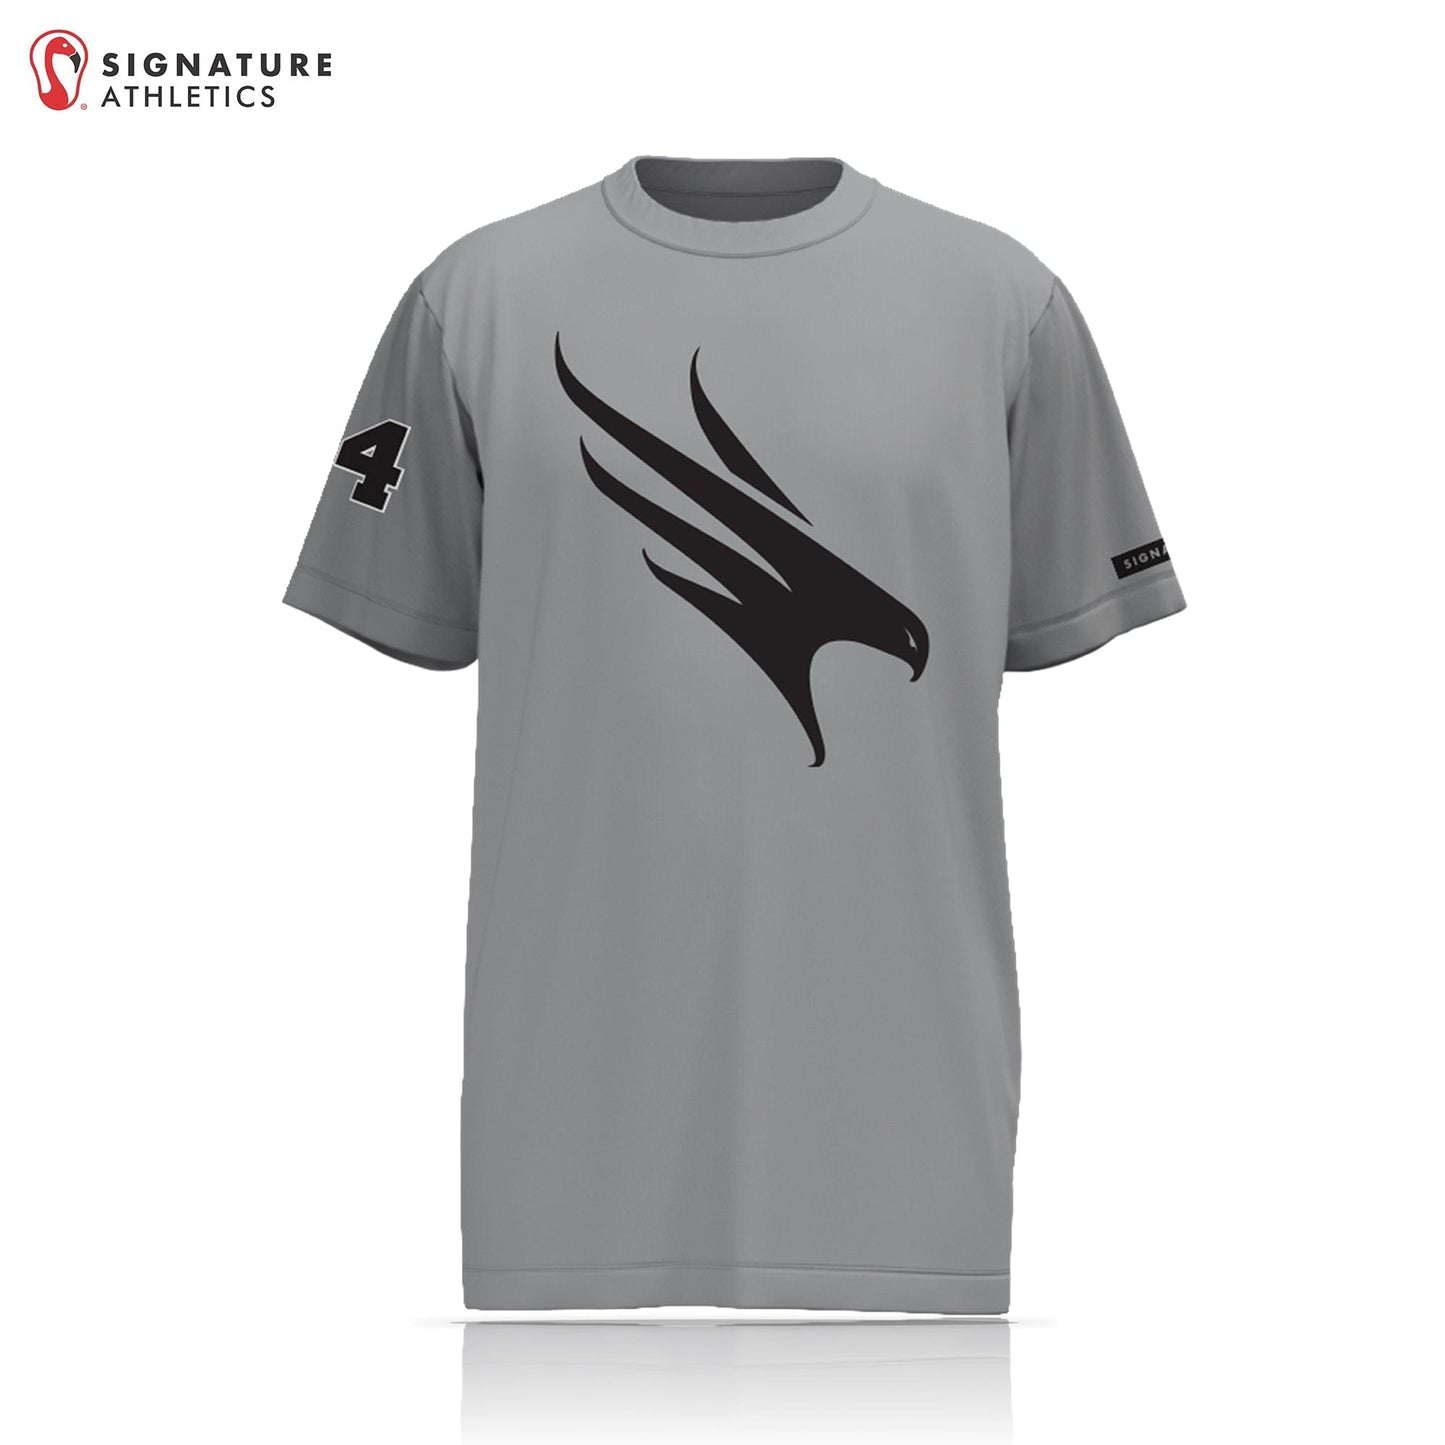 Firehawks Lacrosse Player Short Sleeve Shooting Shirt: 12U Signature Lacrosse